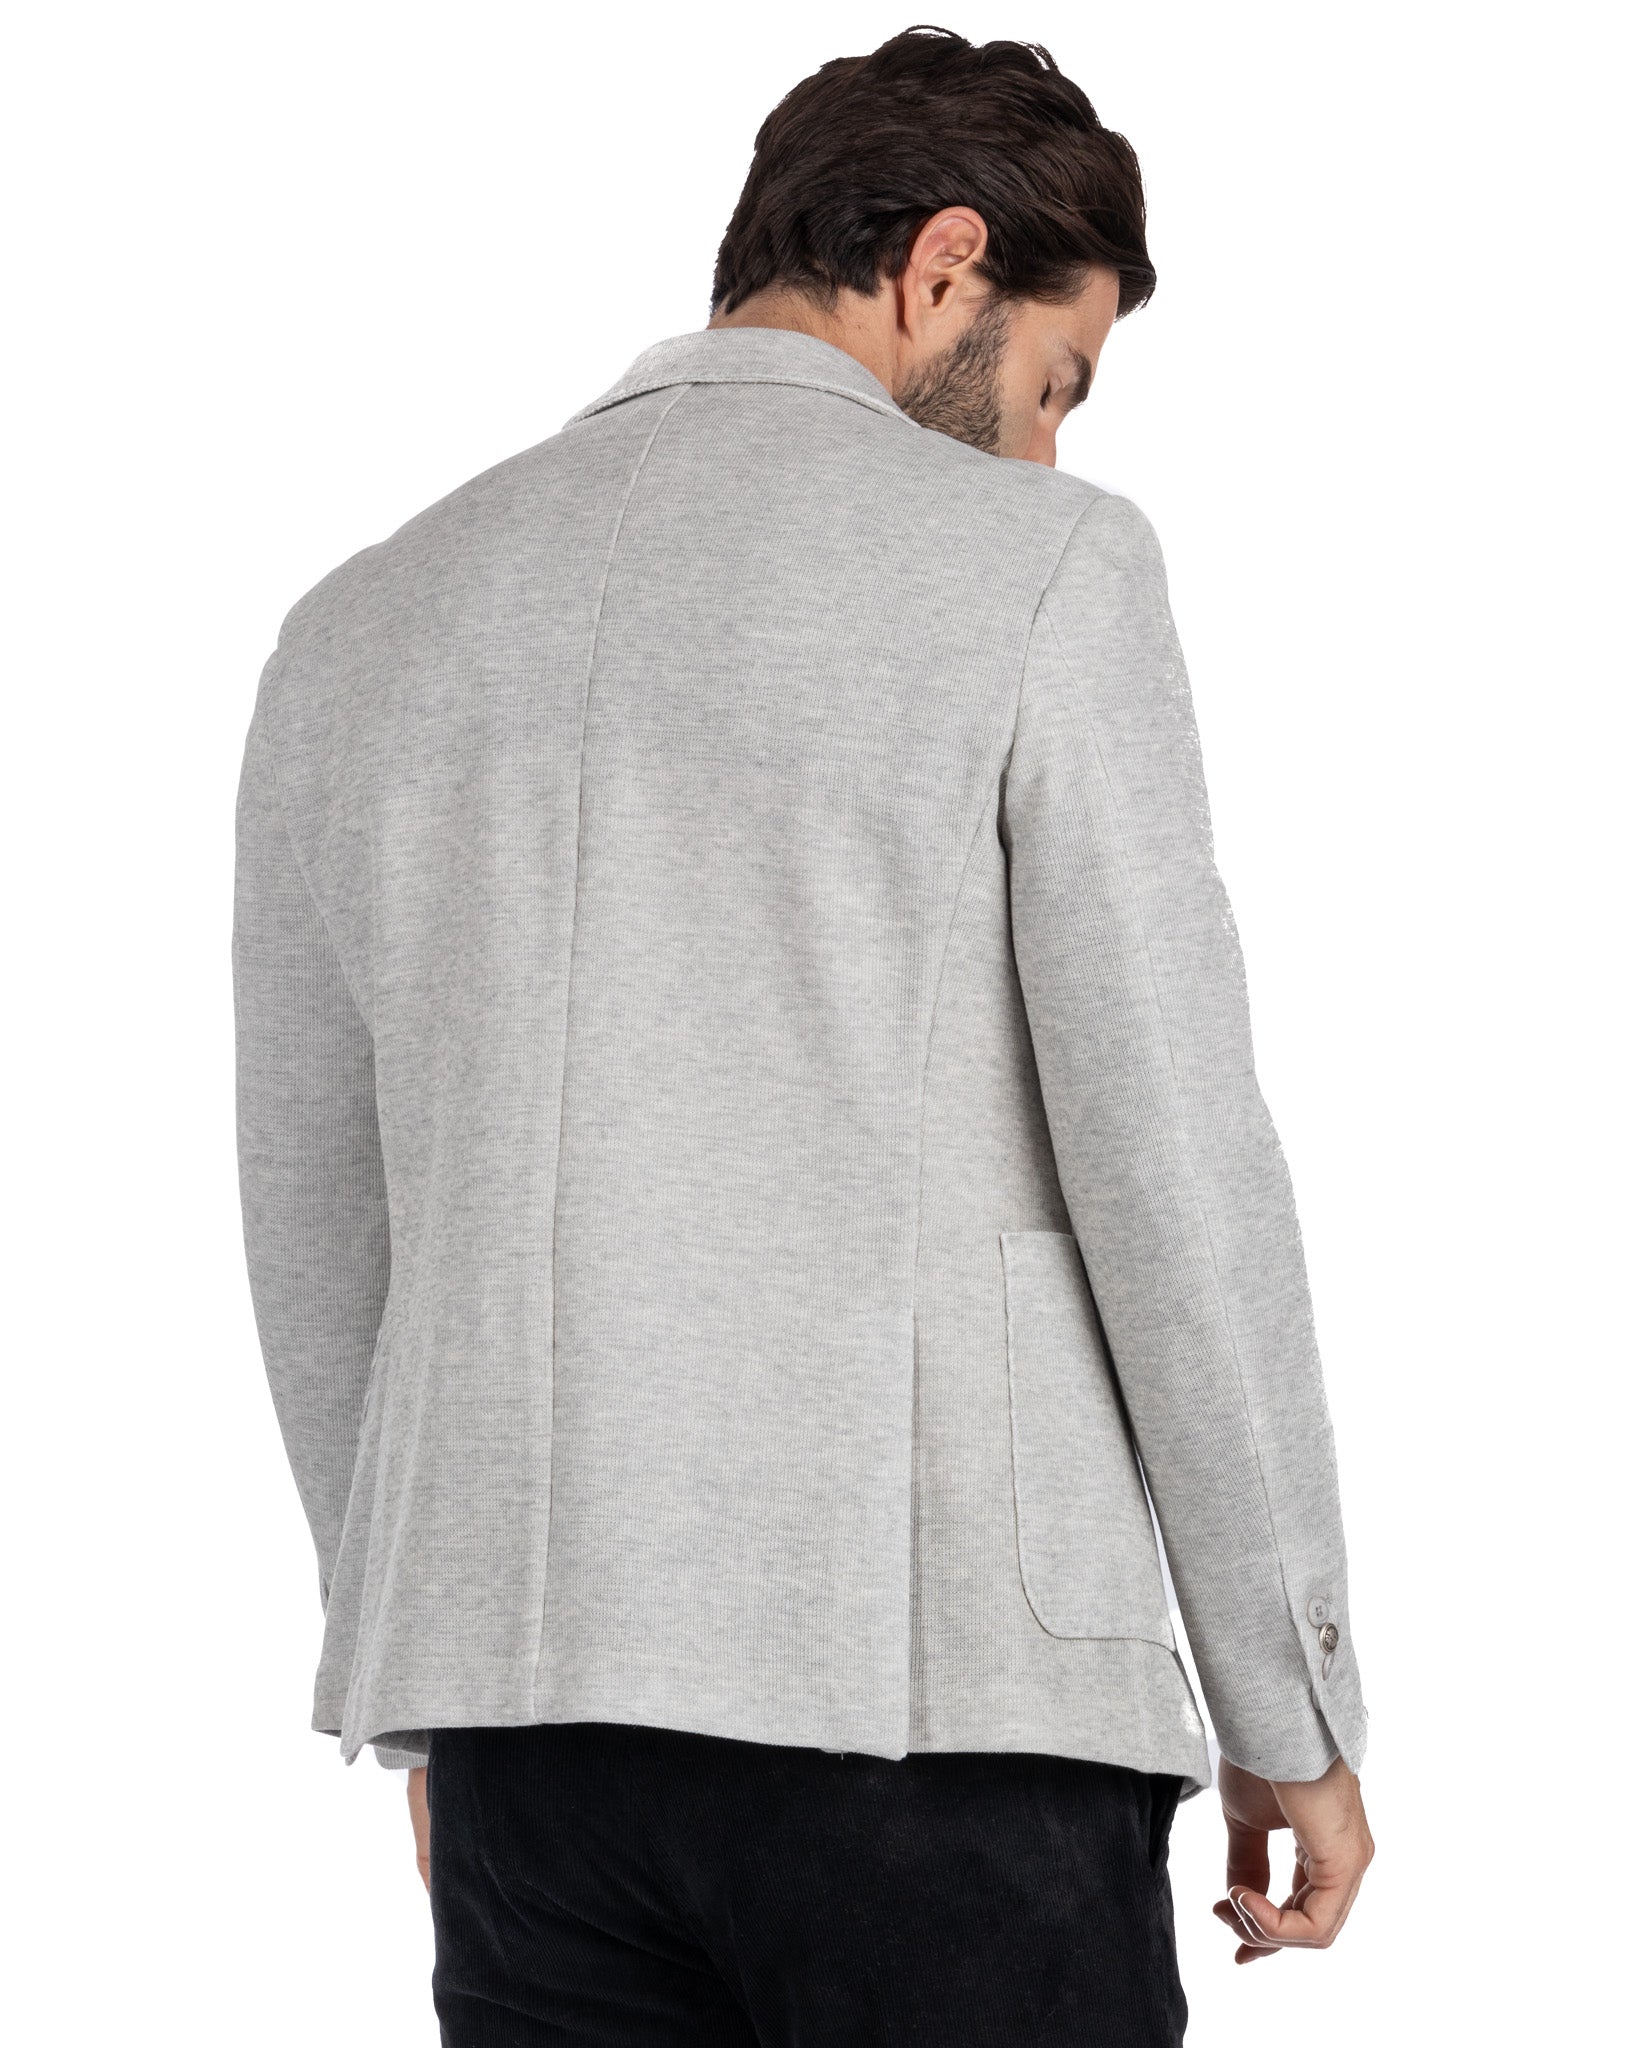 Adolfo - single-breasted gray jersey jacket